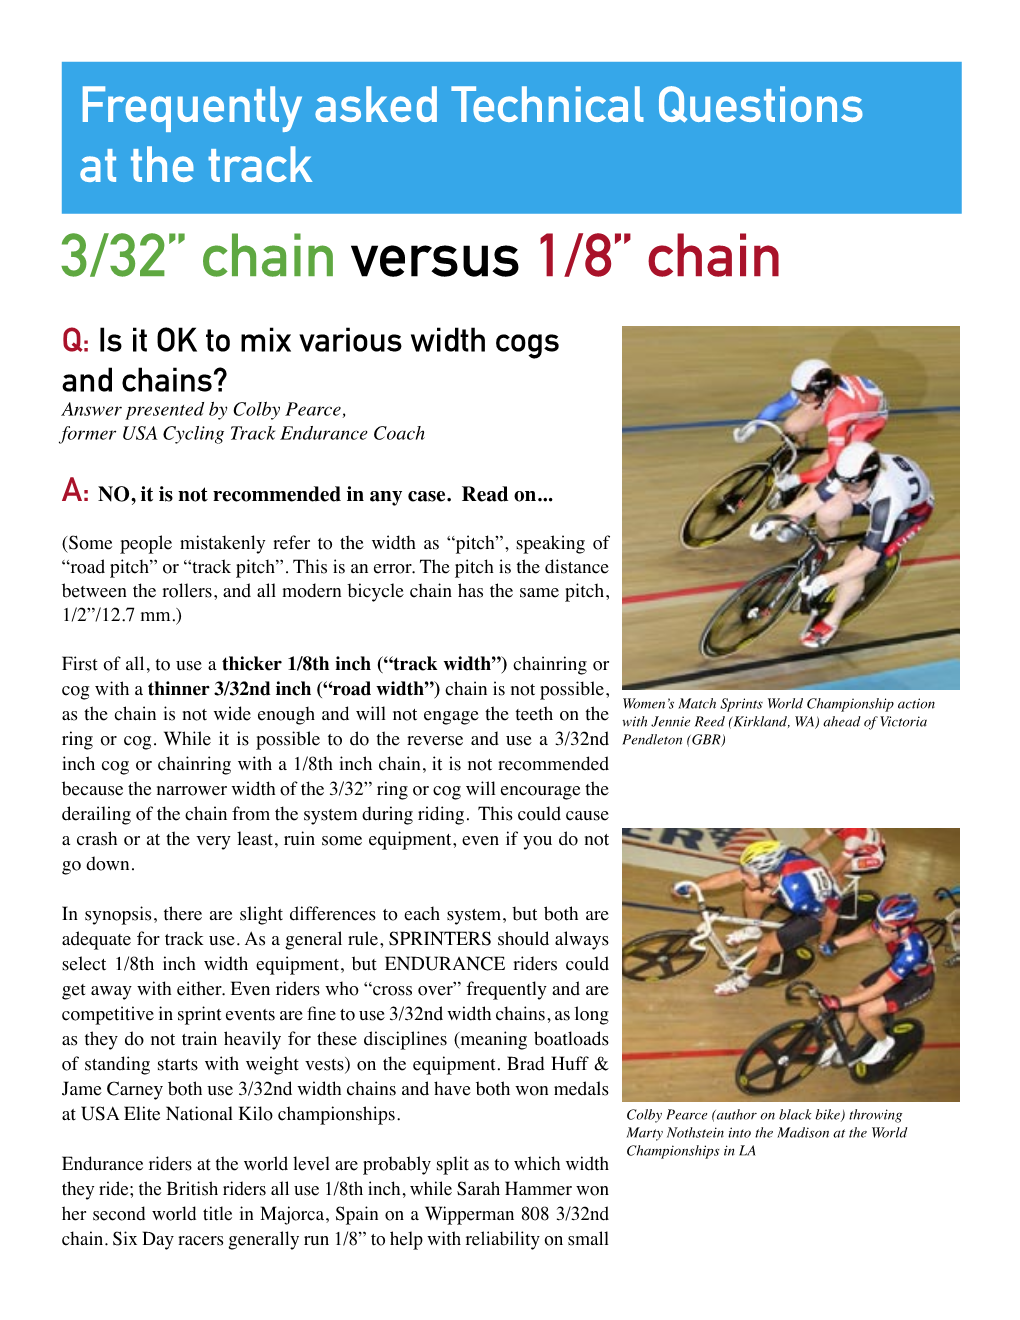 3/32” Chain Versus 1/8” Chain